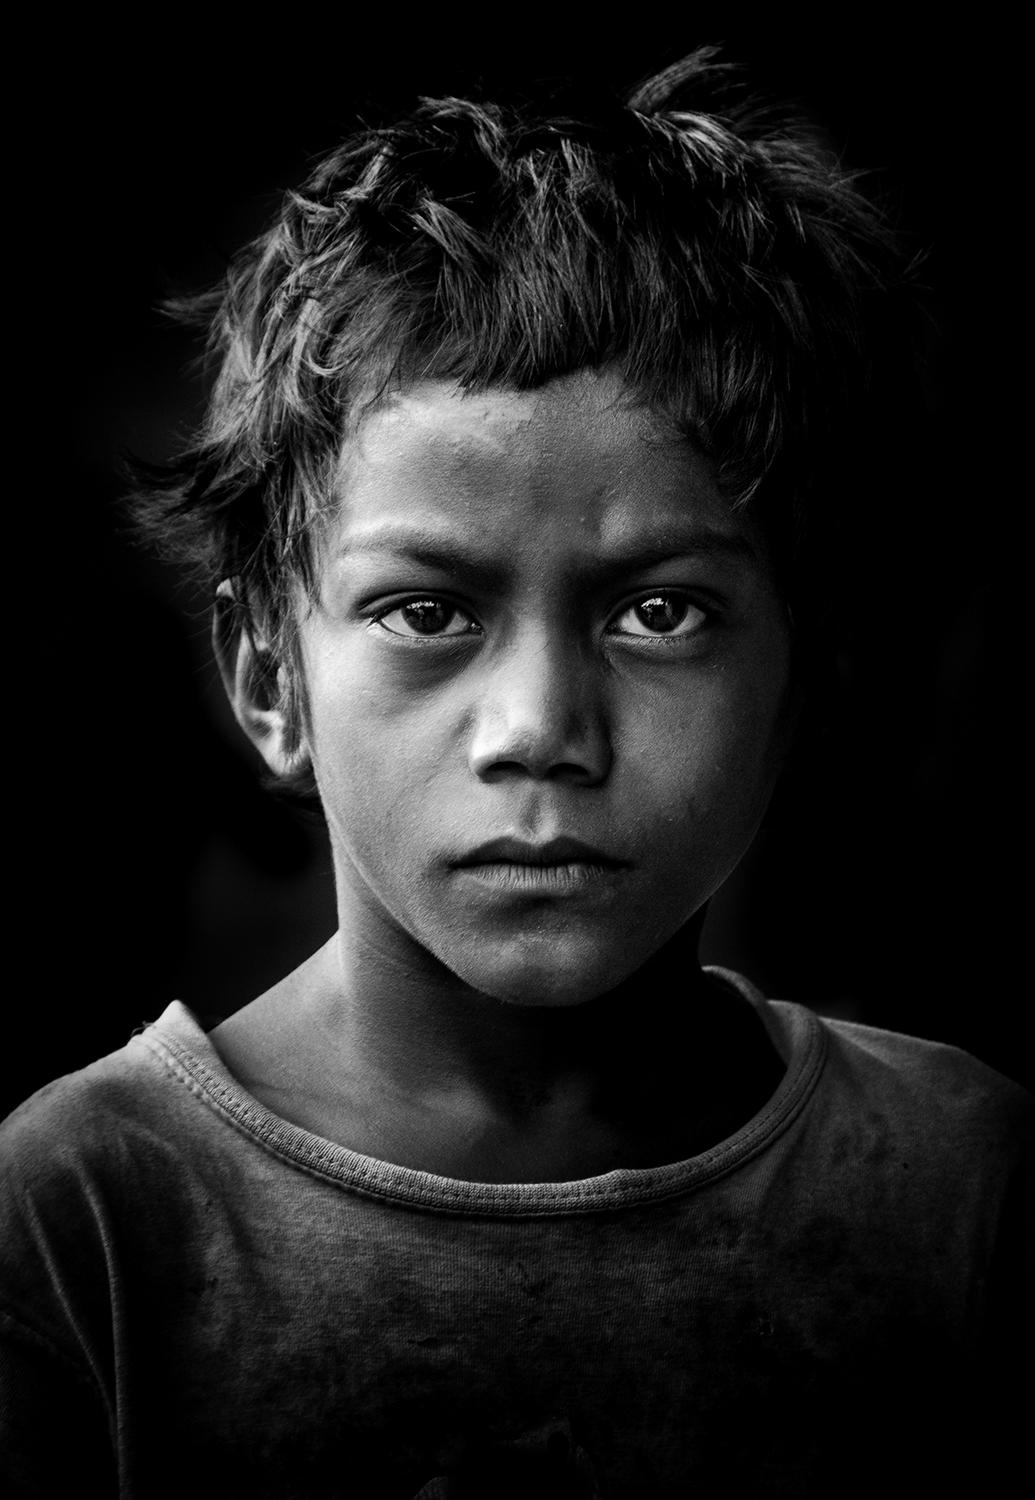 faces people Bahrain Arab nepal black eye eyes portraits portrait photo Canon boy women woman